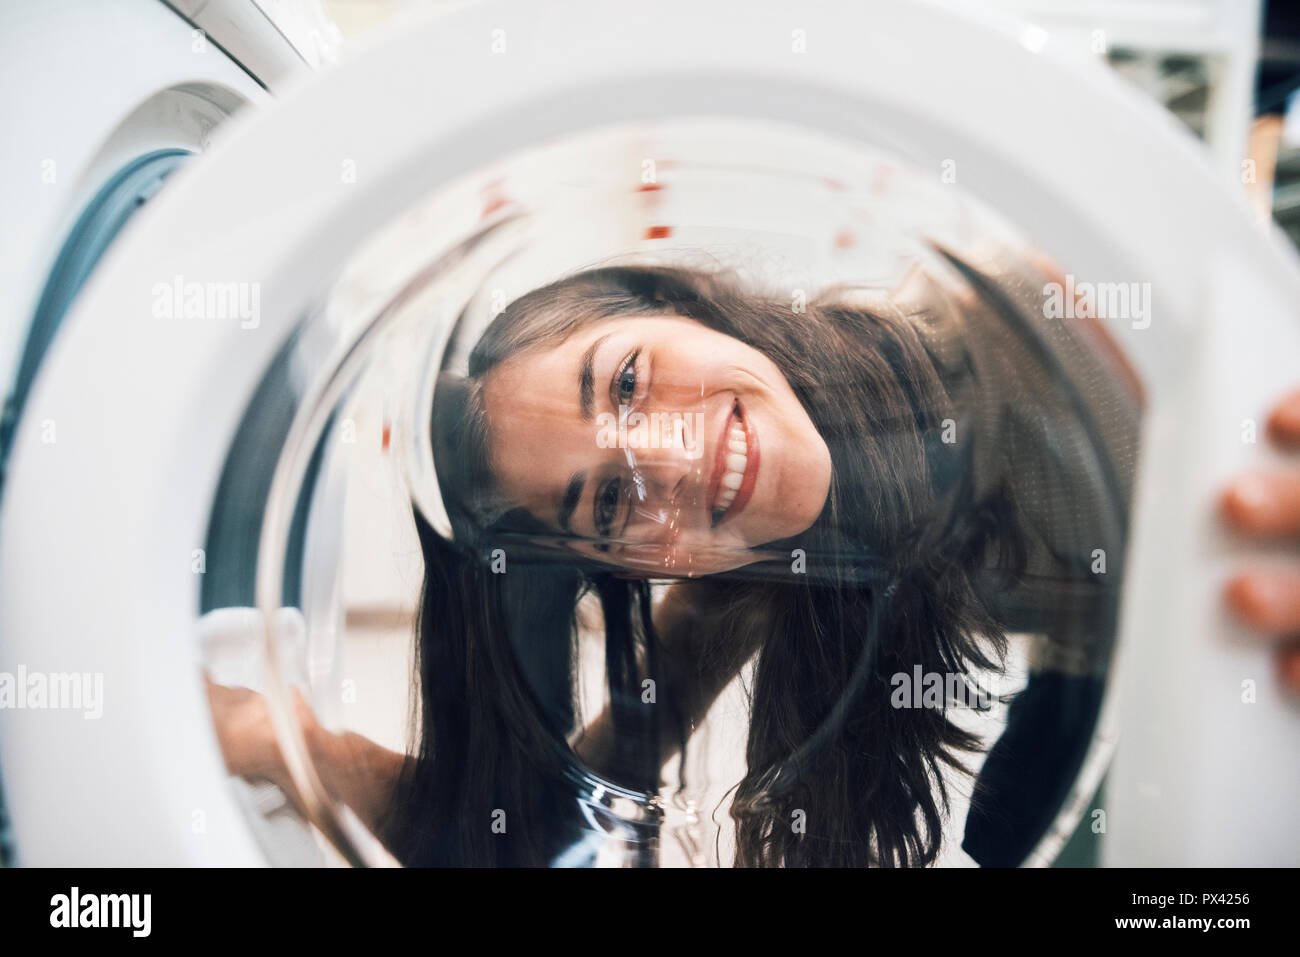 woman smiling cheerfully through a washing machine door Stock Photo